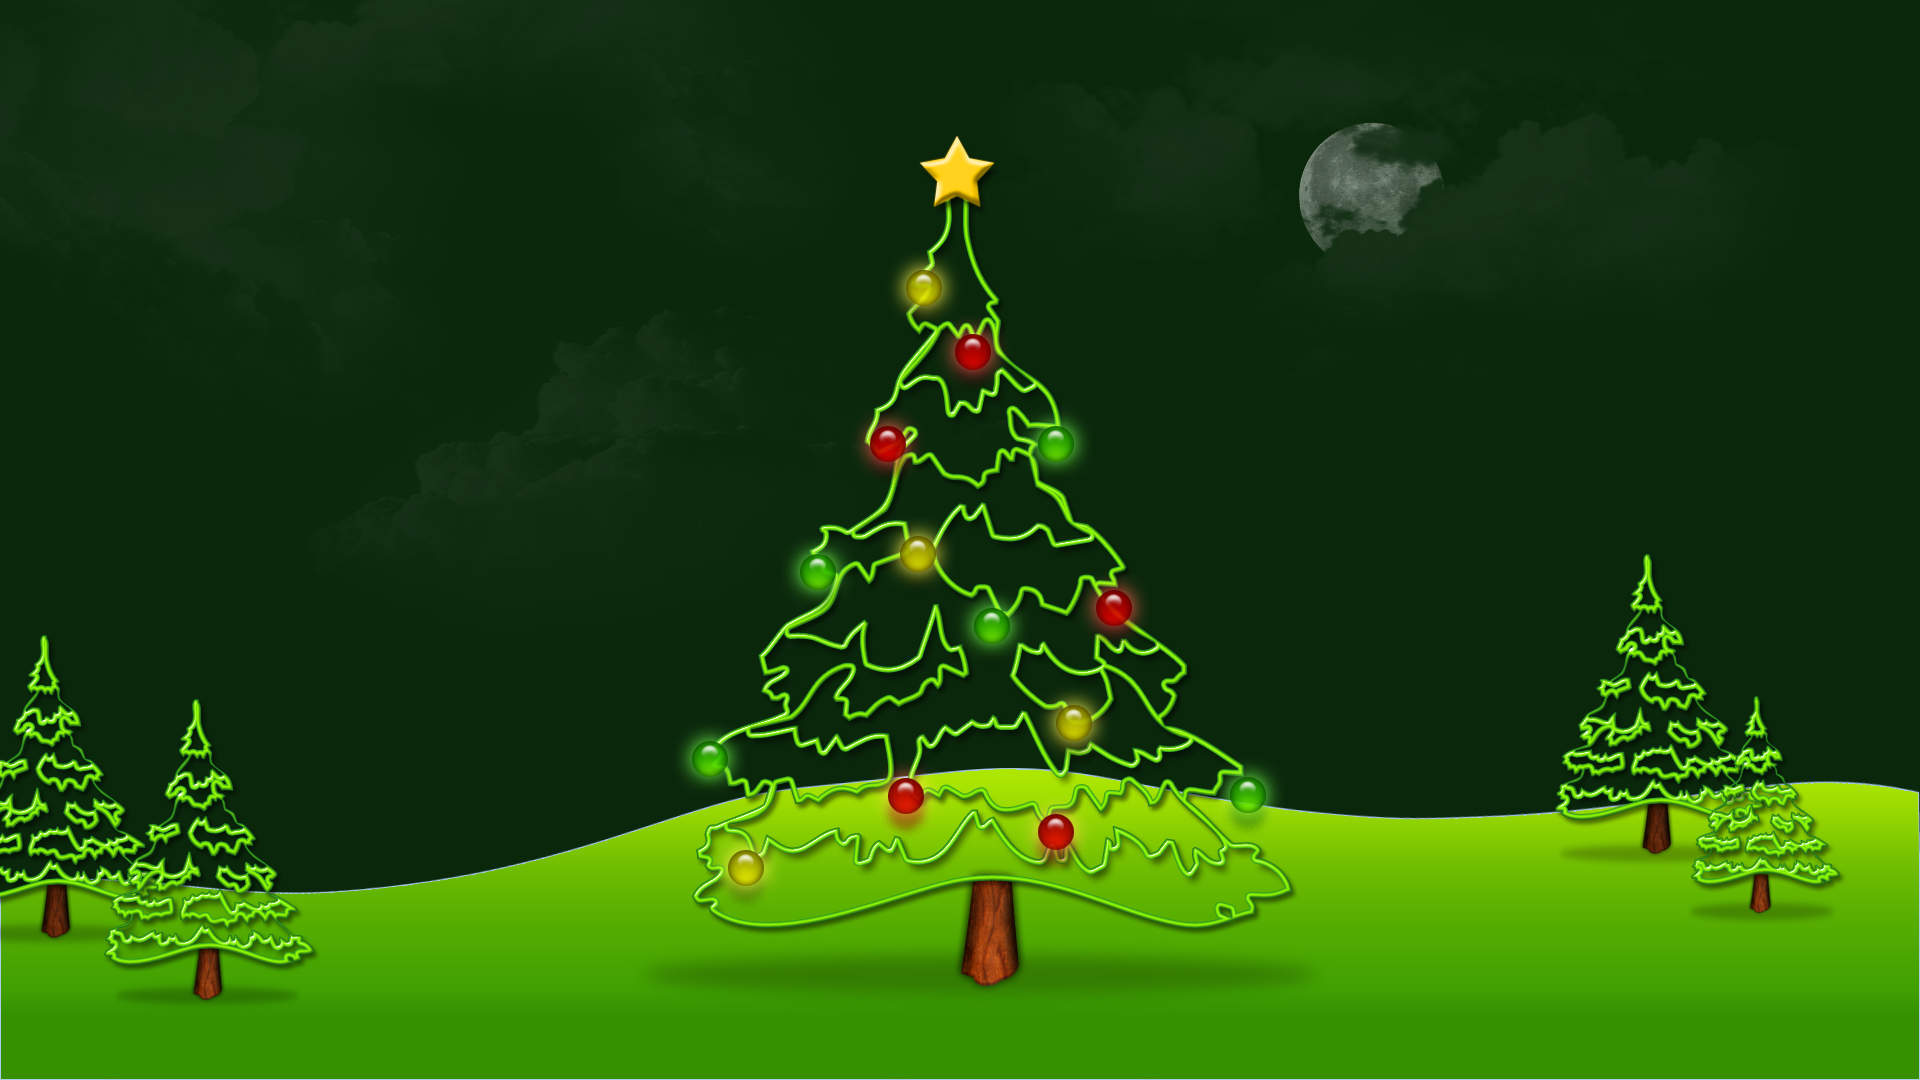 Wallpaper Hd Hari Natal - Animated Christmas Wallpaper Hd , HD Wallpaper & Backgrounds